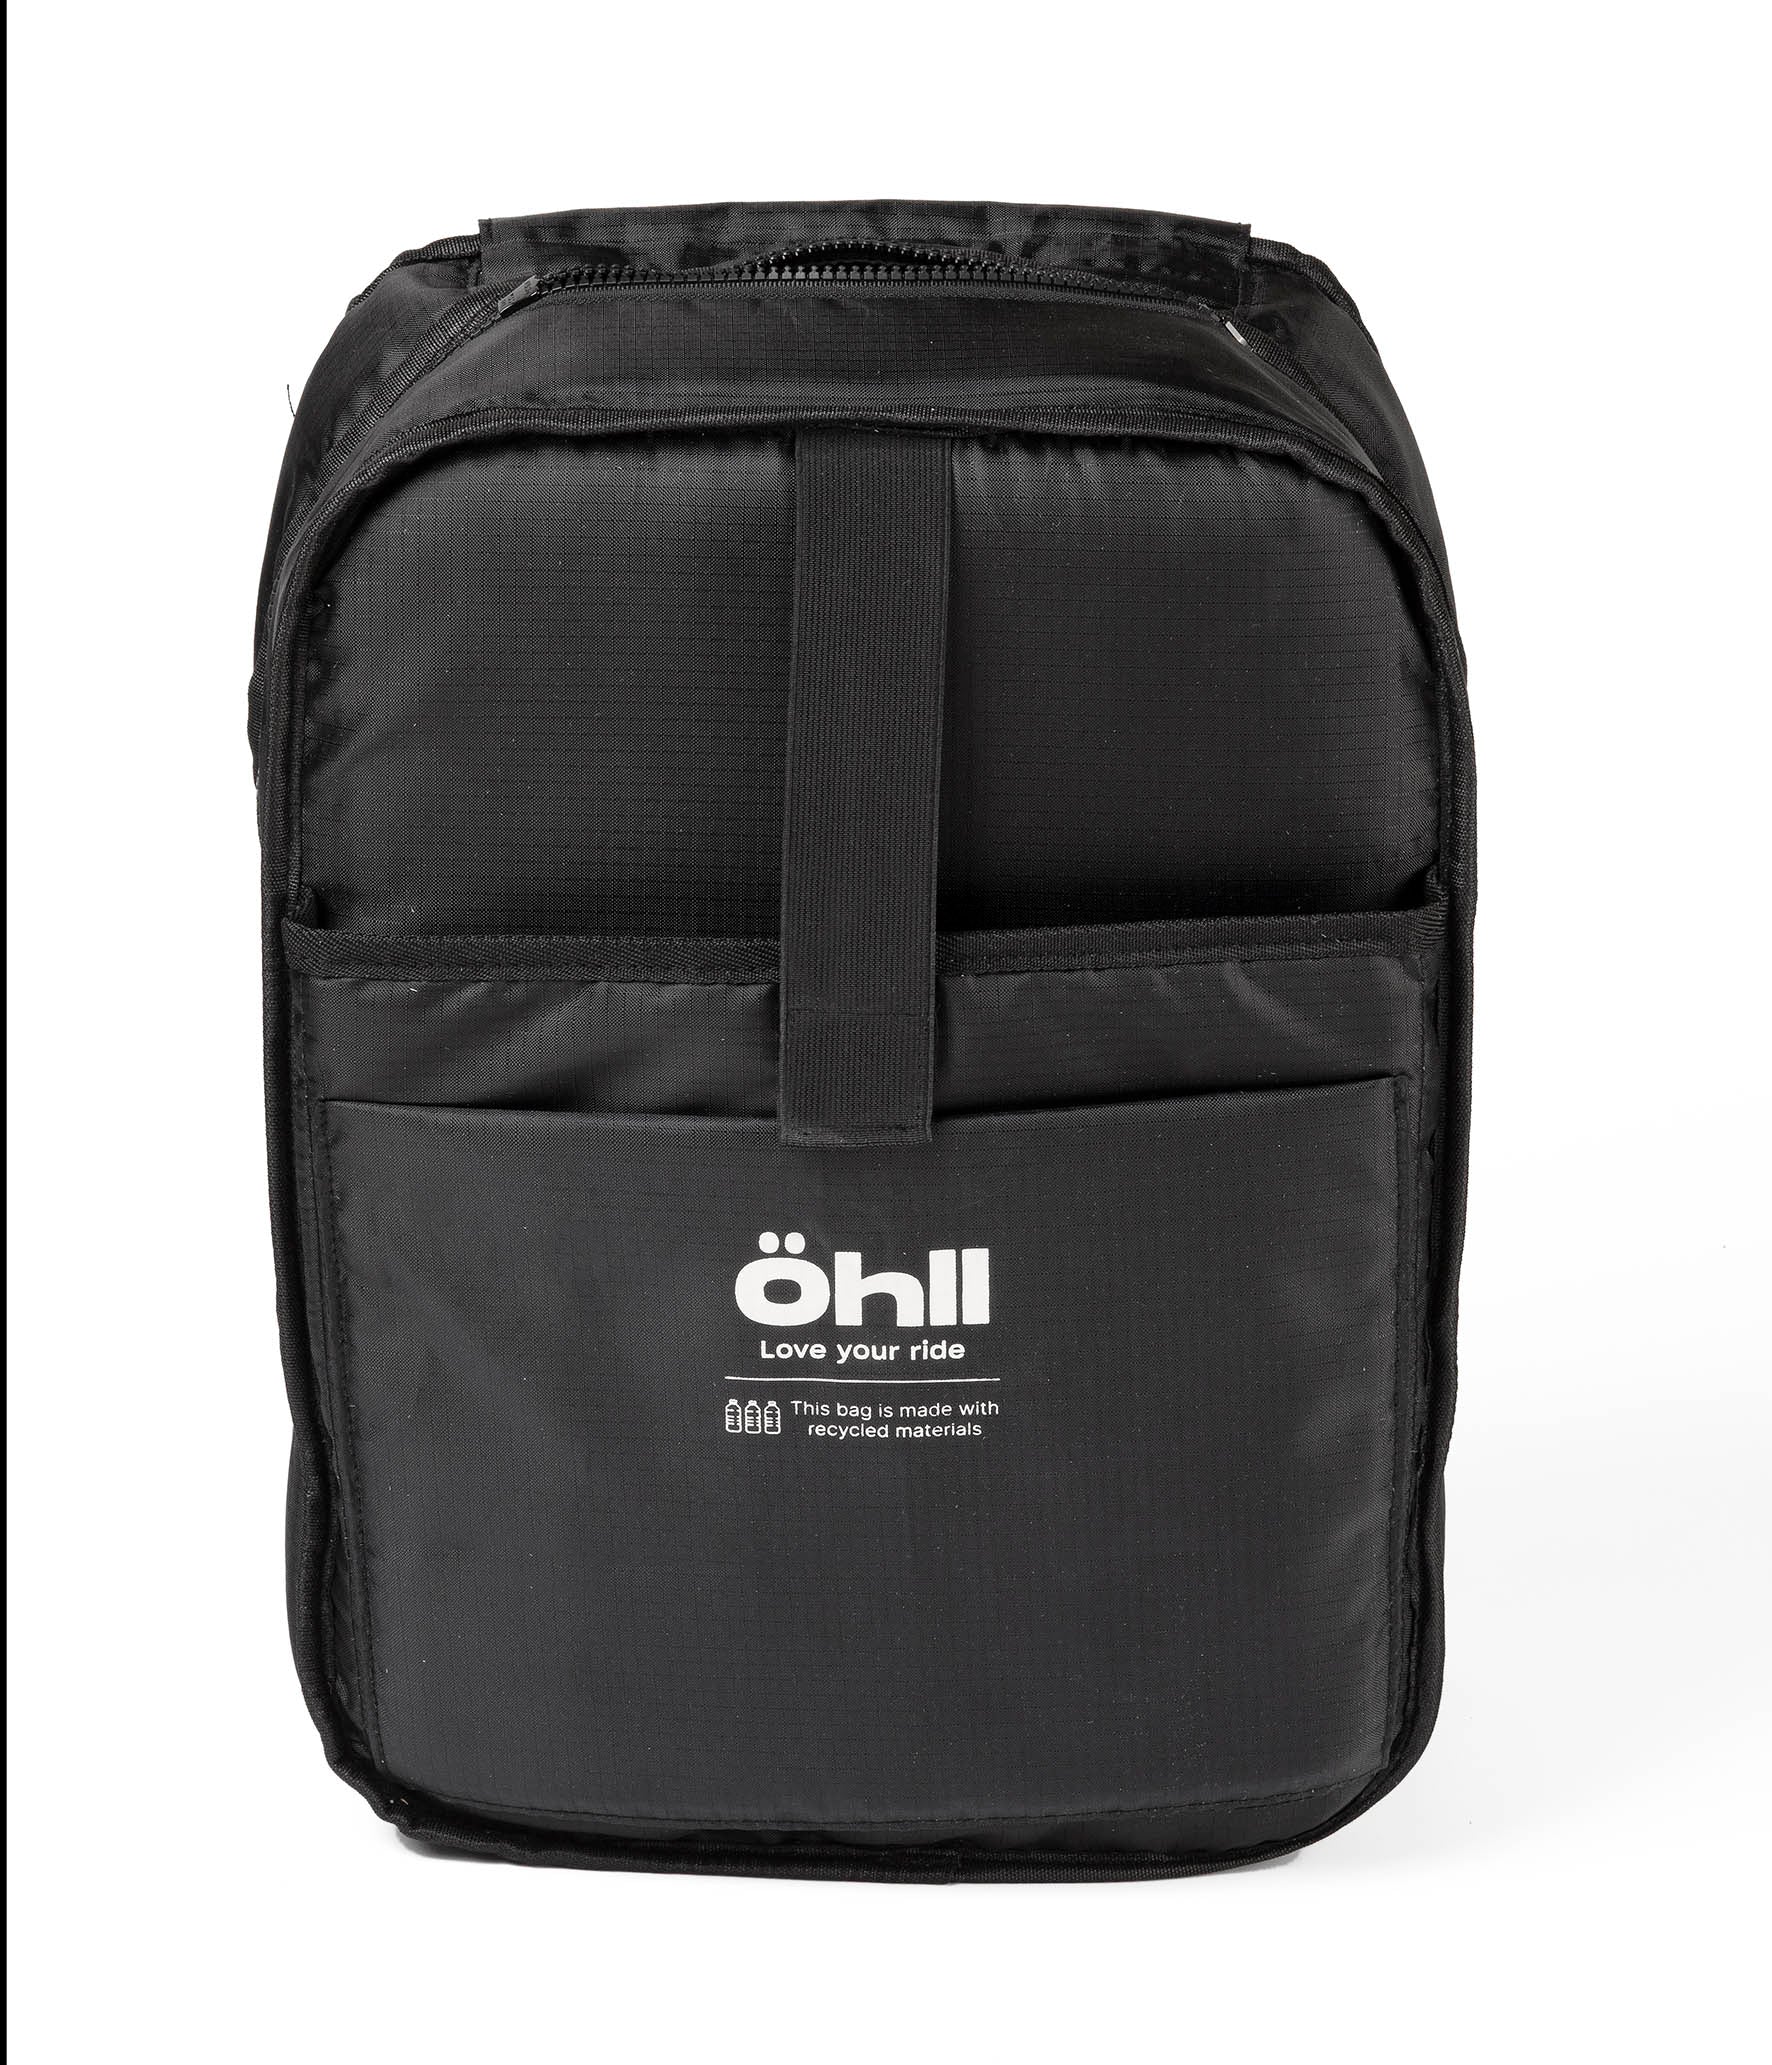 Öhll Backpack Black laptop and table sleeve inside rear